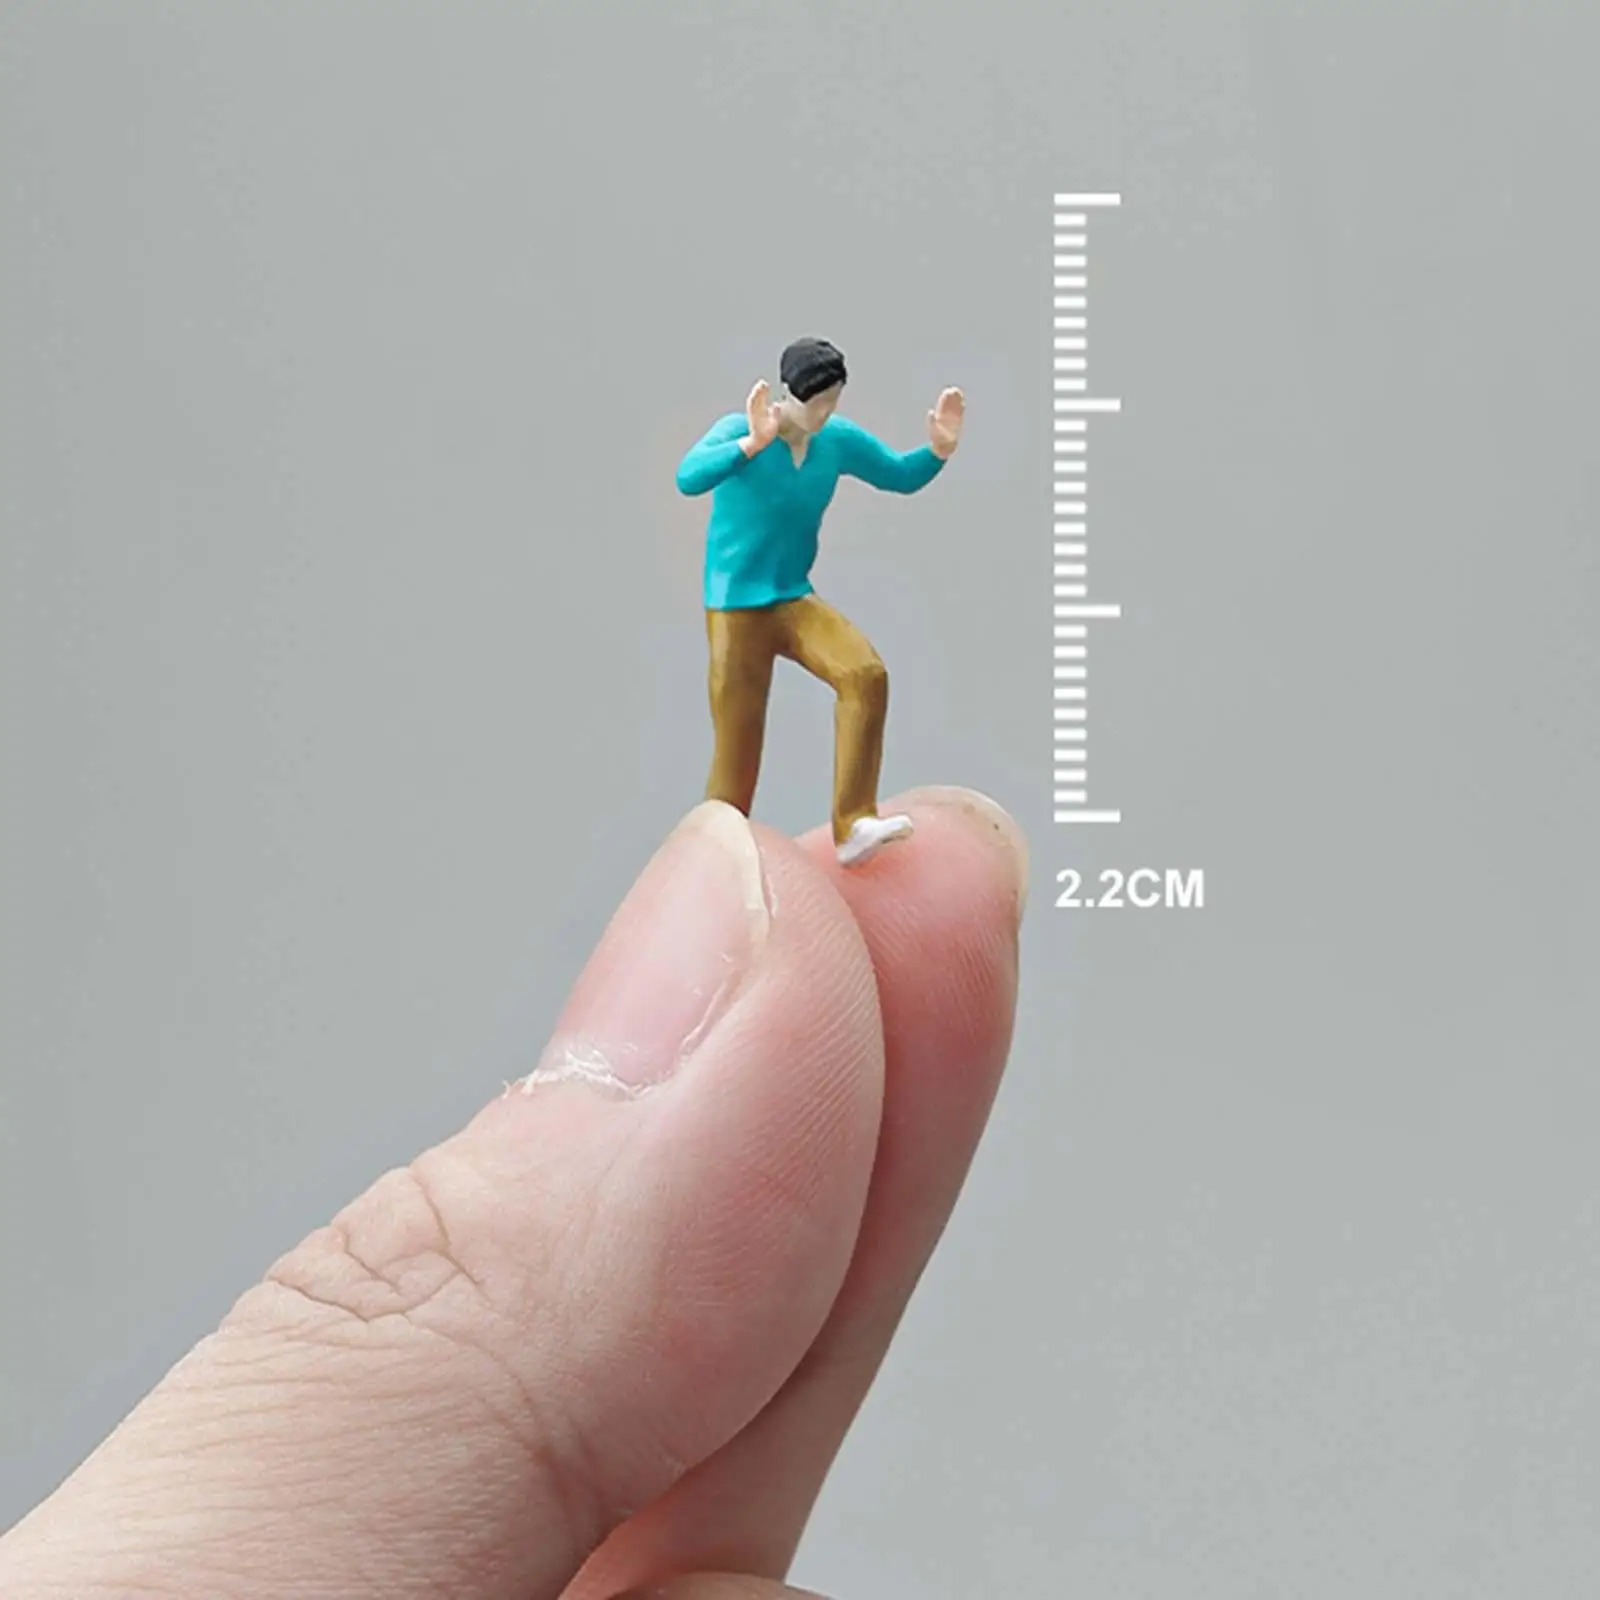 1/64 Miniature Model Figures Photography Props Miniature People Model Tiny People 1/64 Scale Model Figures Desktop Ornament